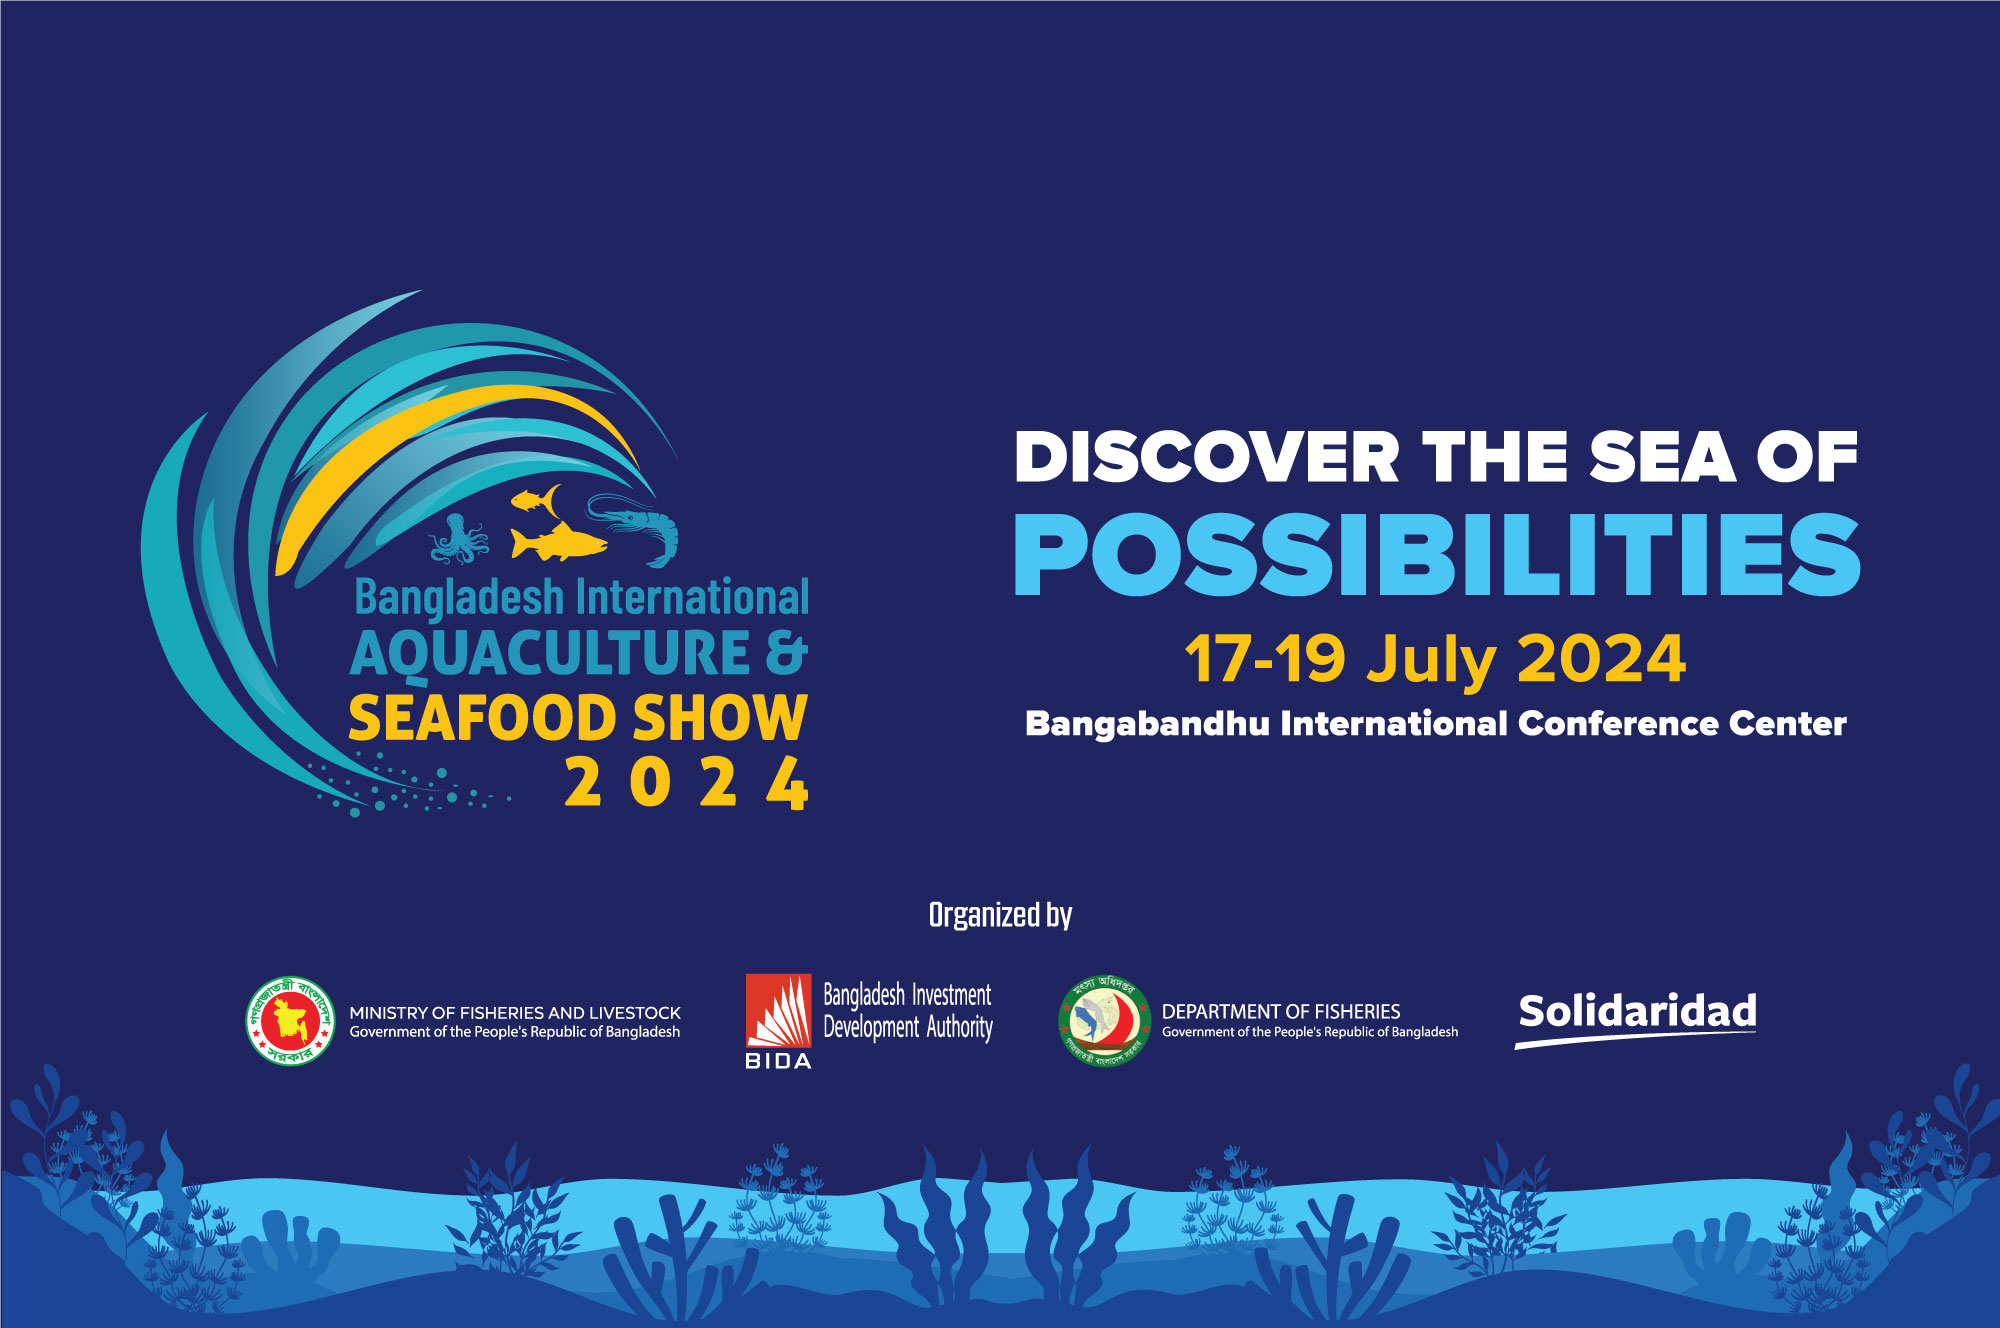 Bangladesh International Aquaculture & Seafood Show 2024 on 17-19 July 2024